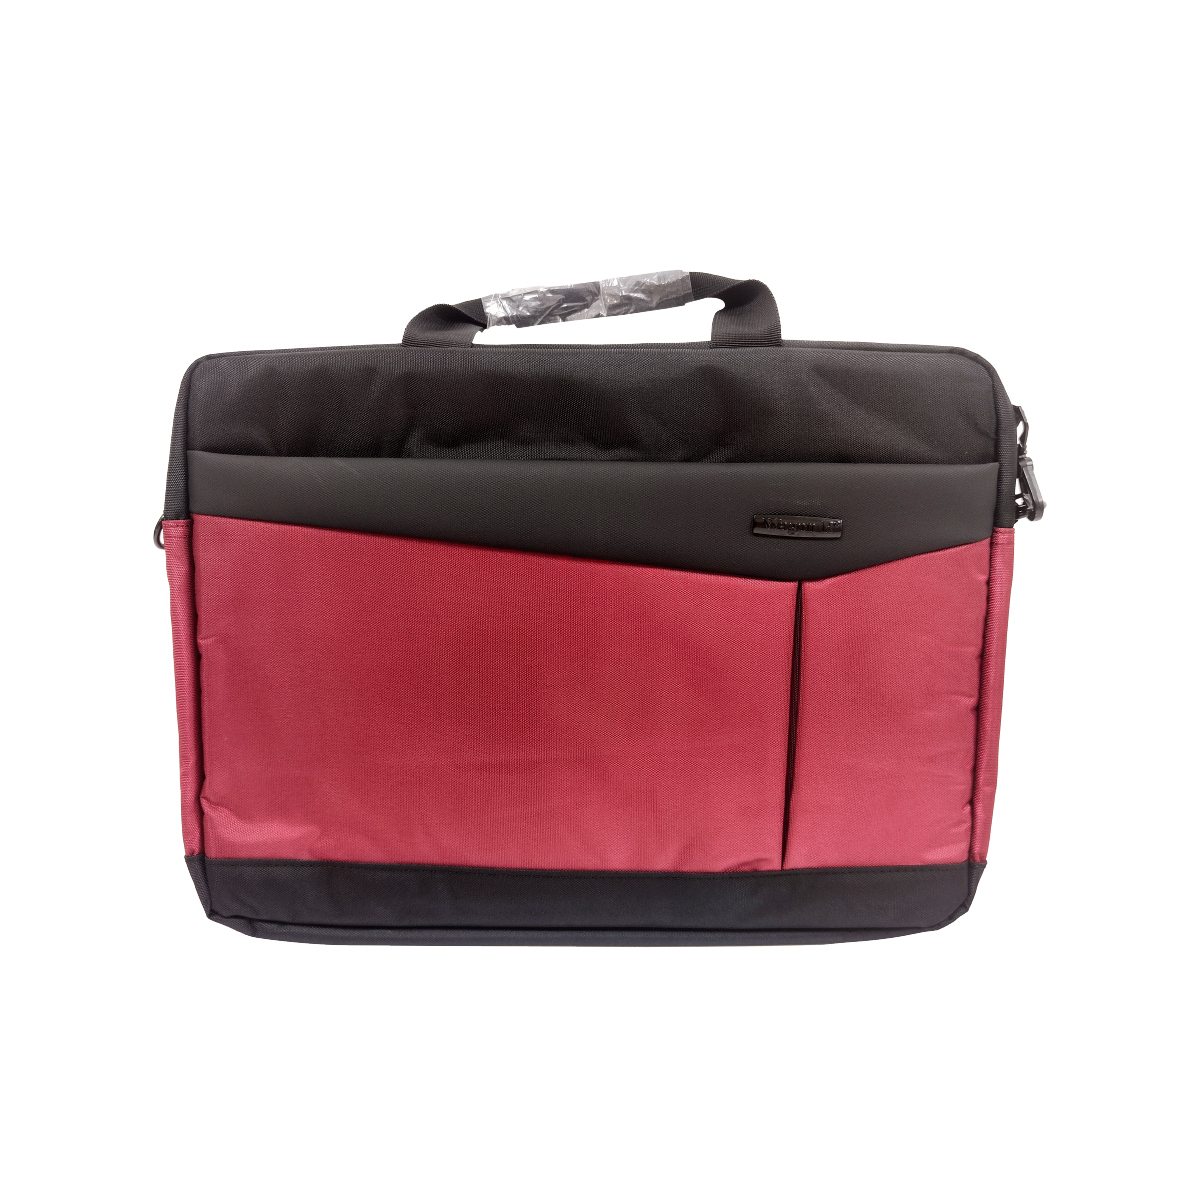 Wagon-R Laptop Bag 5064 17Inch